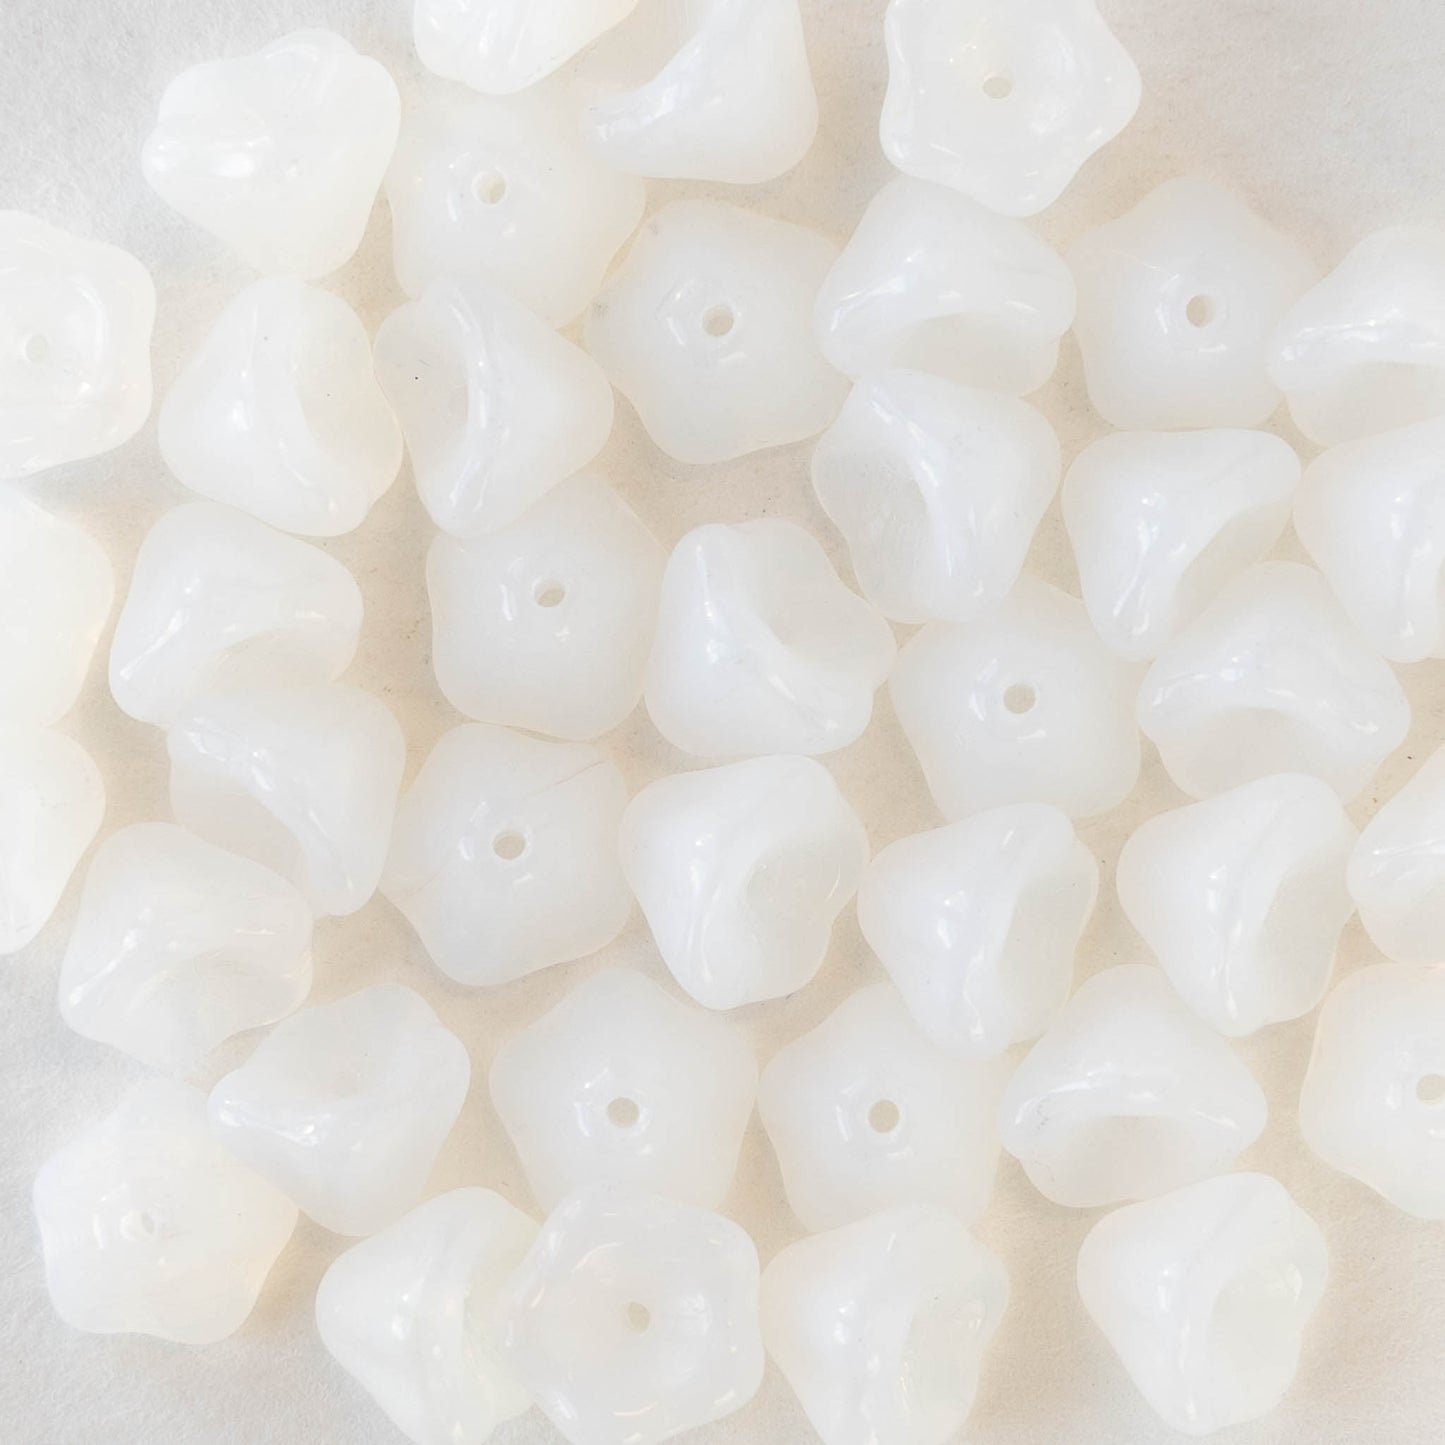 6x8mm Glass Flower Beads - White Opaline - 30